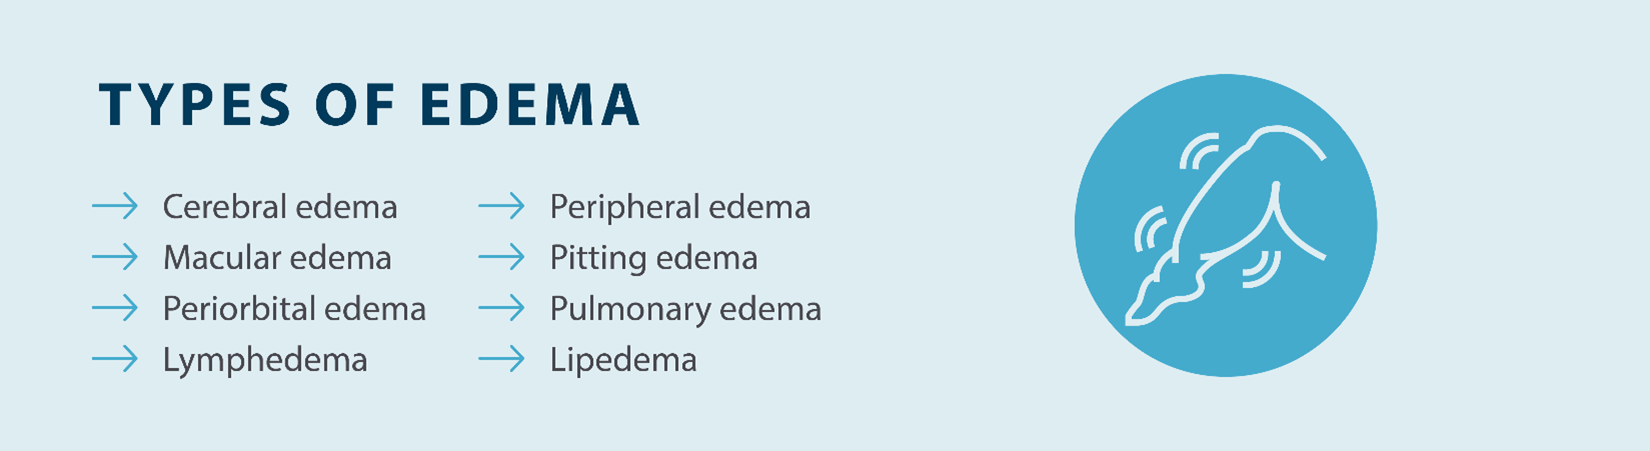 types of edema: cerebral edema, macular edema, periorbital edema, lymphedema, peripheral edema, pitting edema, pulmonary edema, lipedema